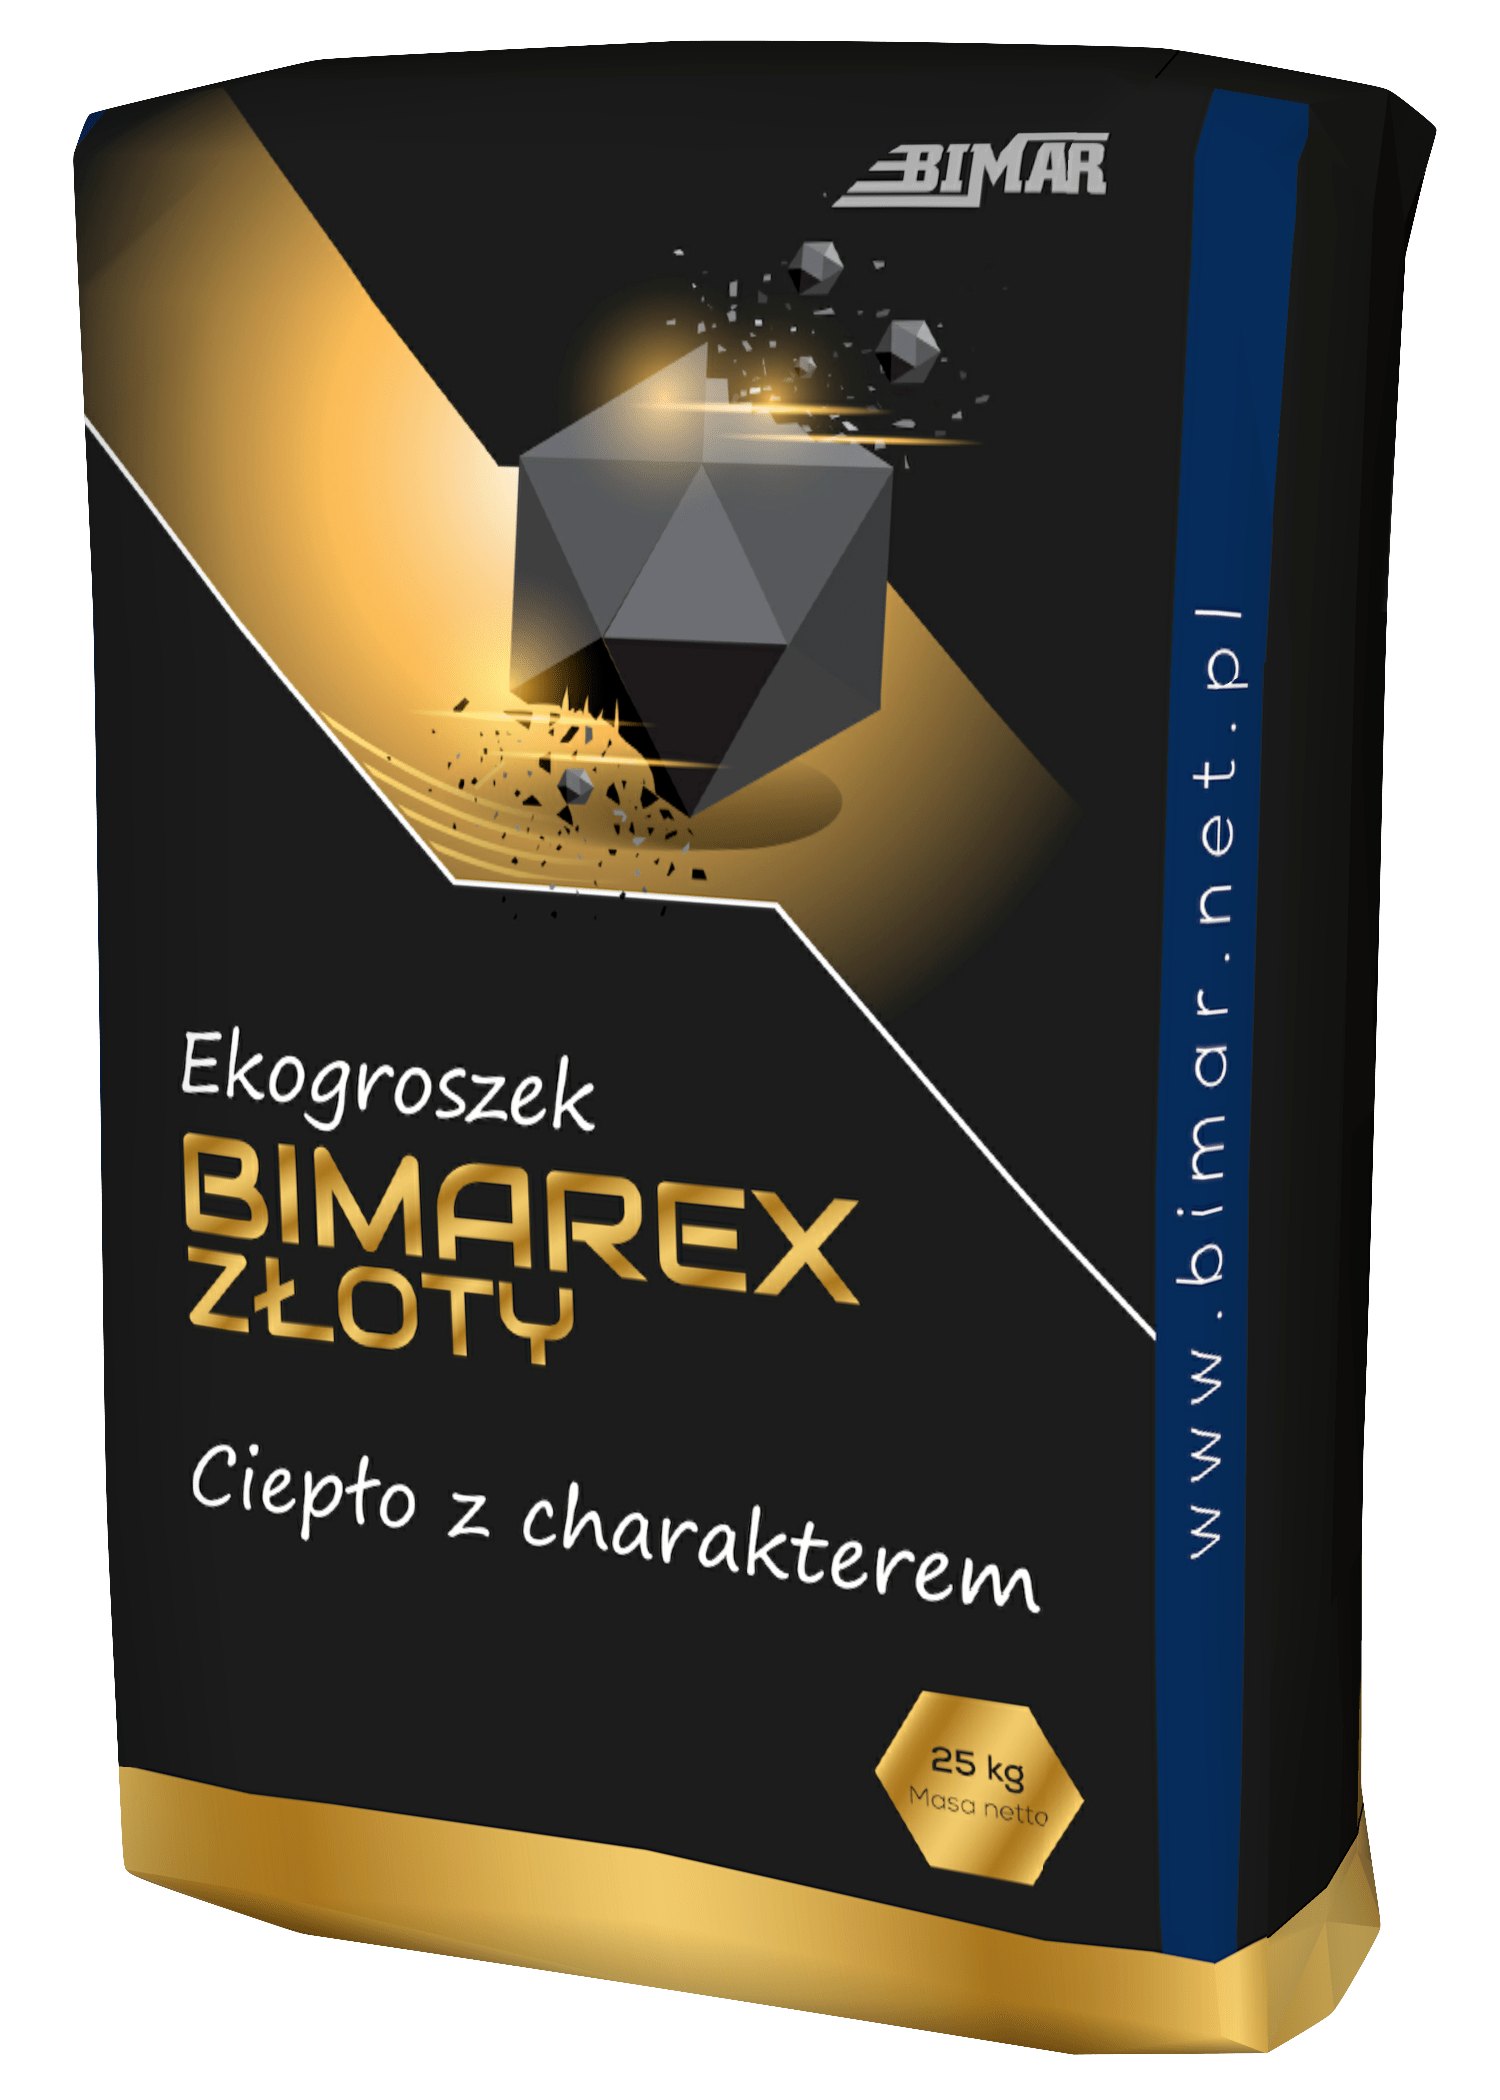 Ekogroszek Bimarex Węgiel Bimar